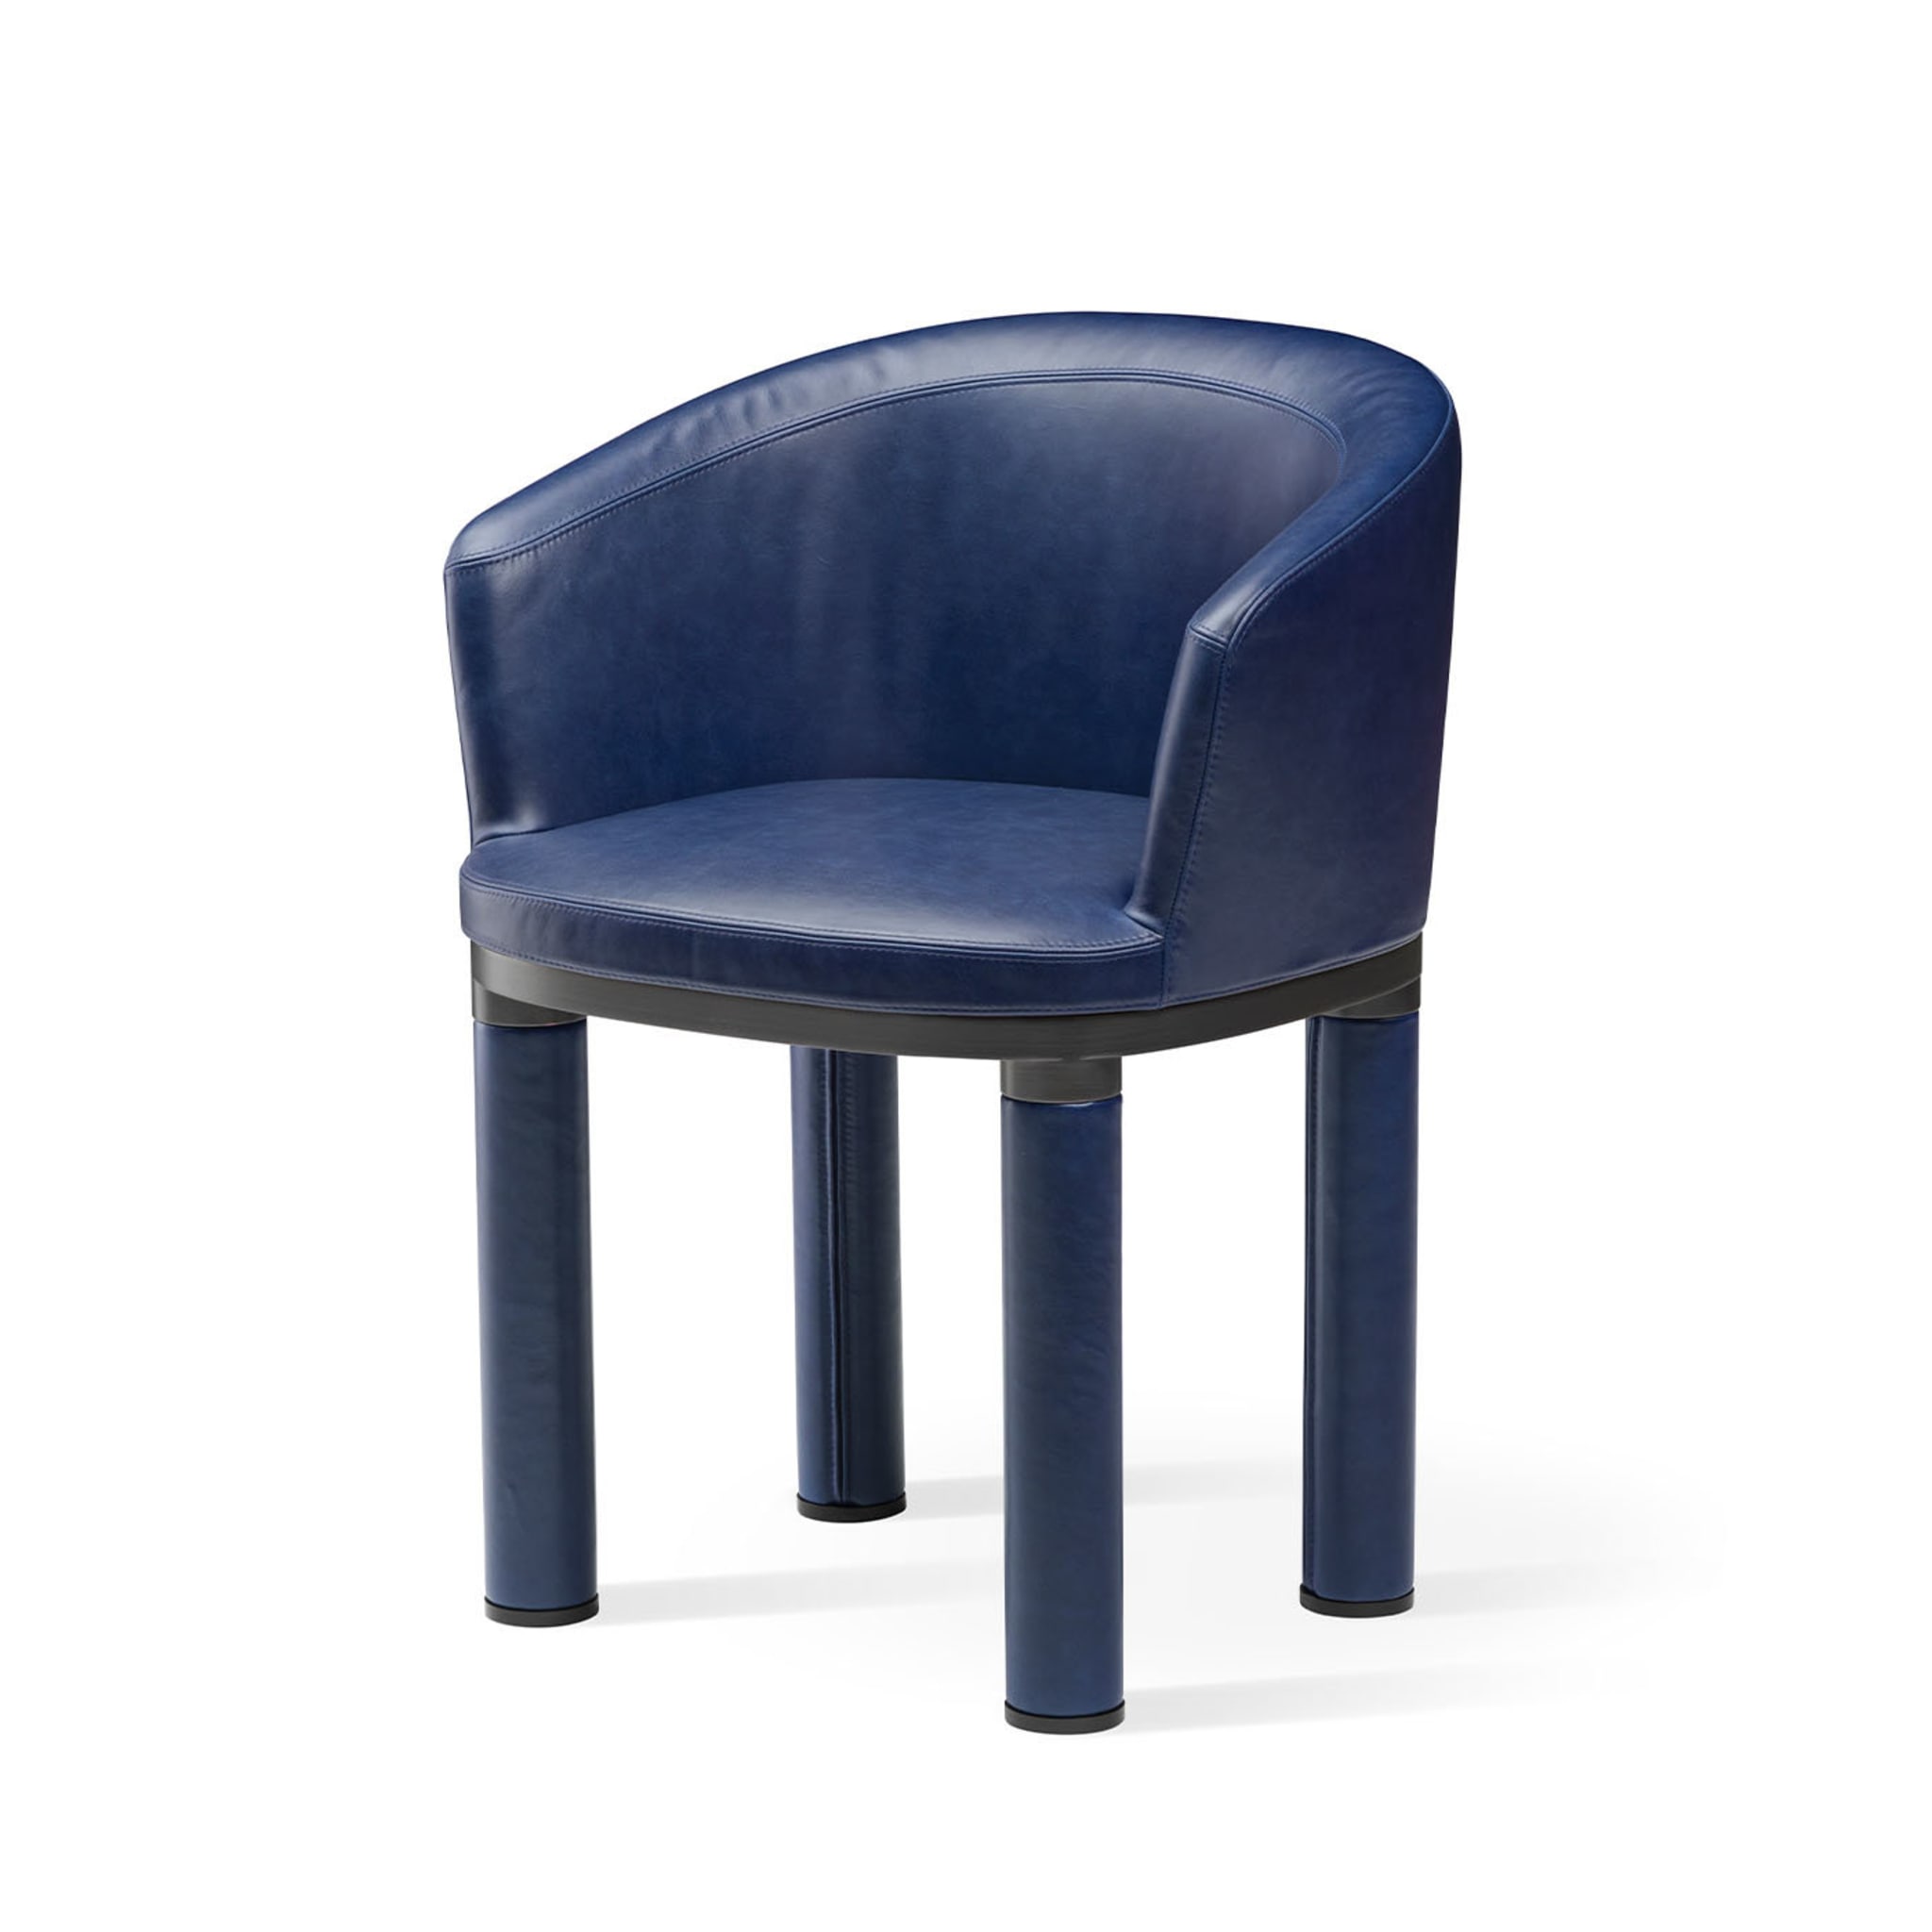 Bold Blue chair - Alternative view 1